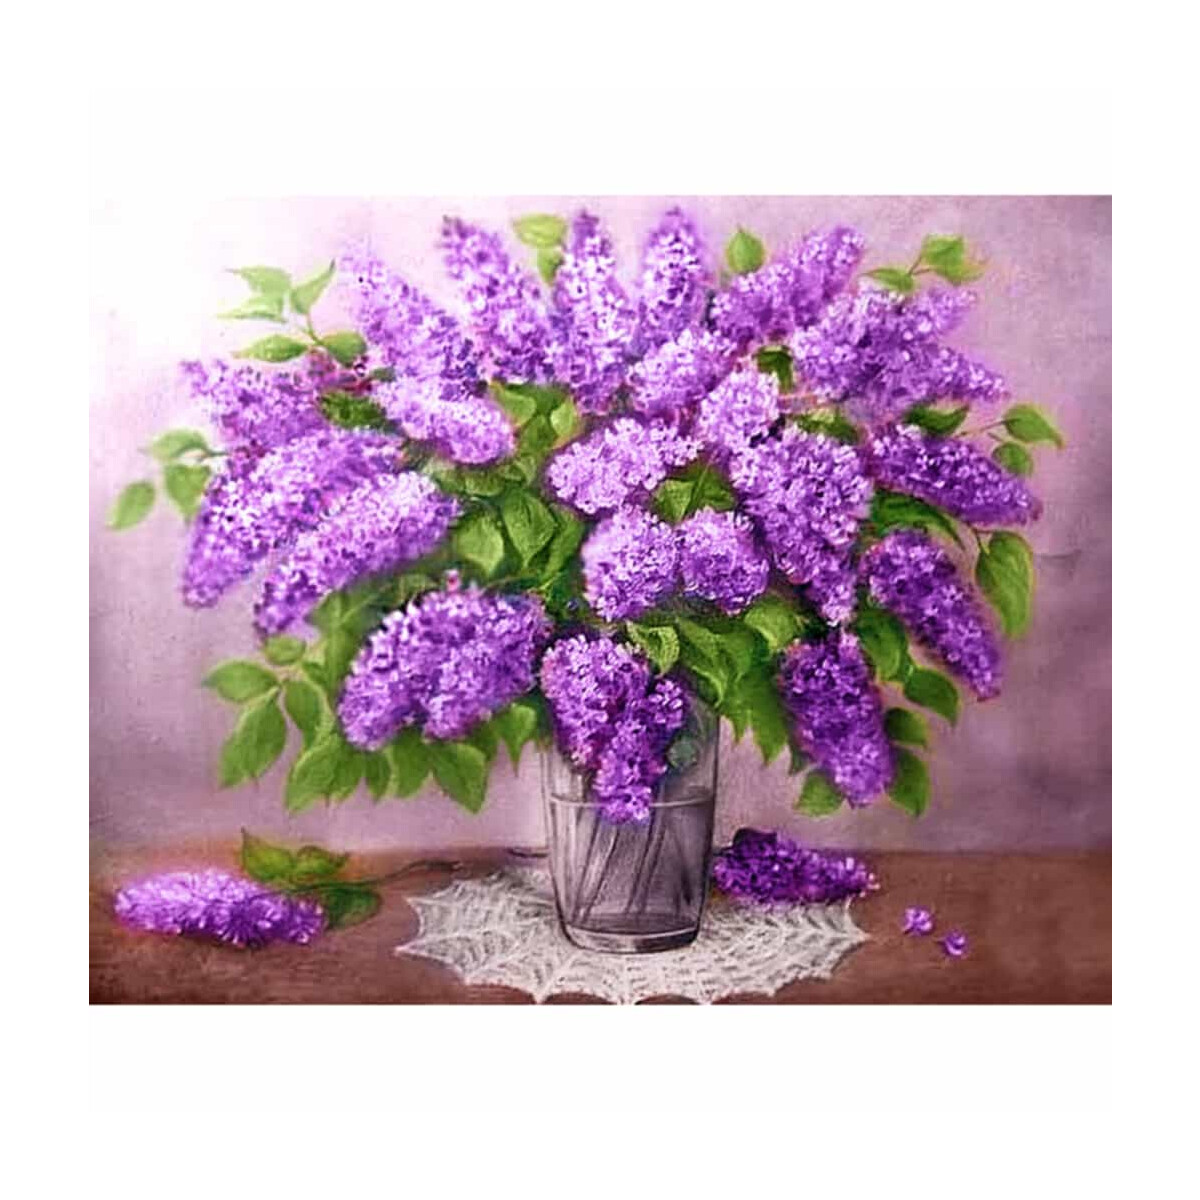 CdA Diamond Embroidery Kit "Lilac  bouquet" 48...